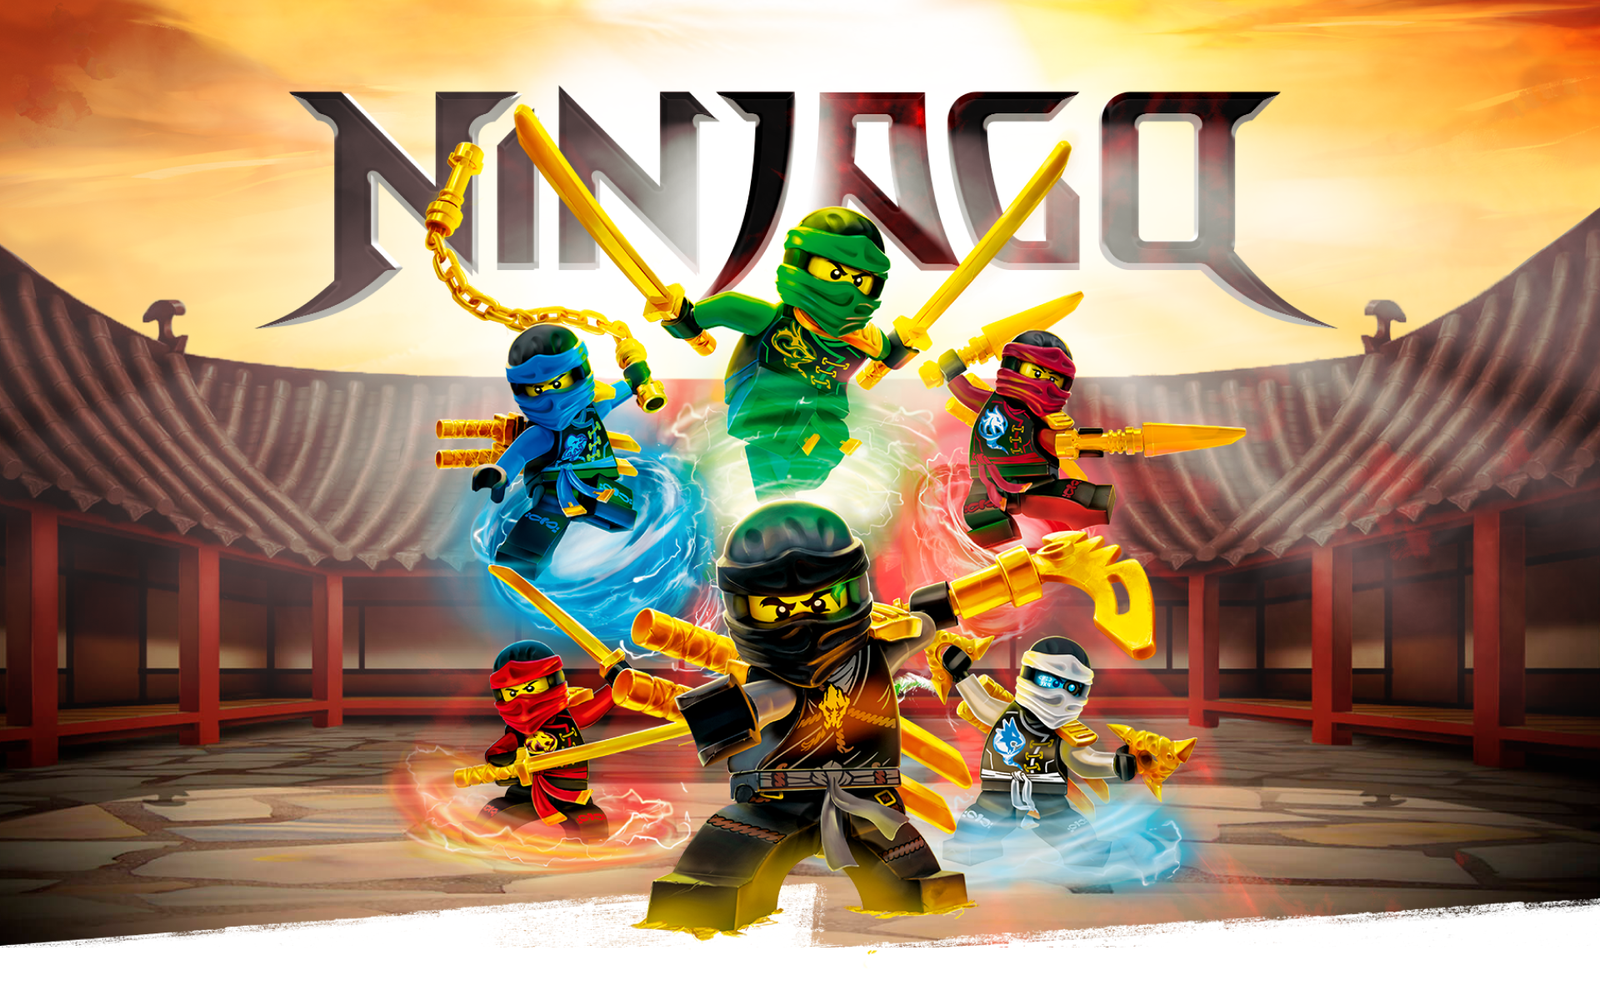  LEGO Ninjago Dragons Rising: Kai Minfigure with Dual Swords  Yellow : Toys & Games